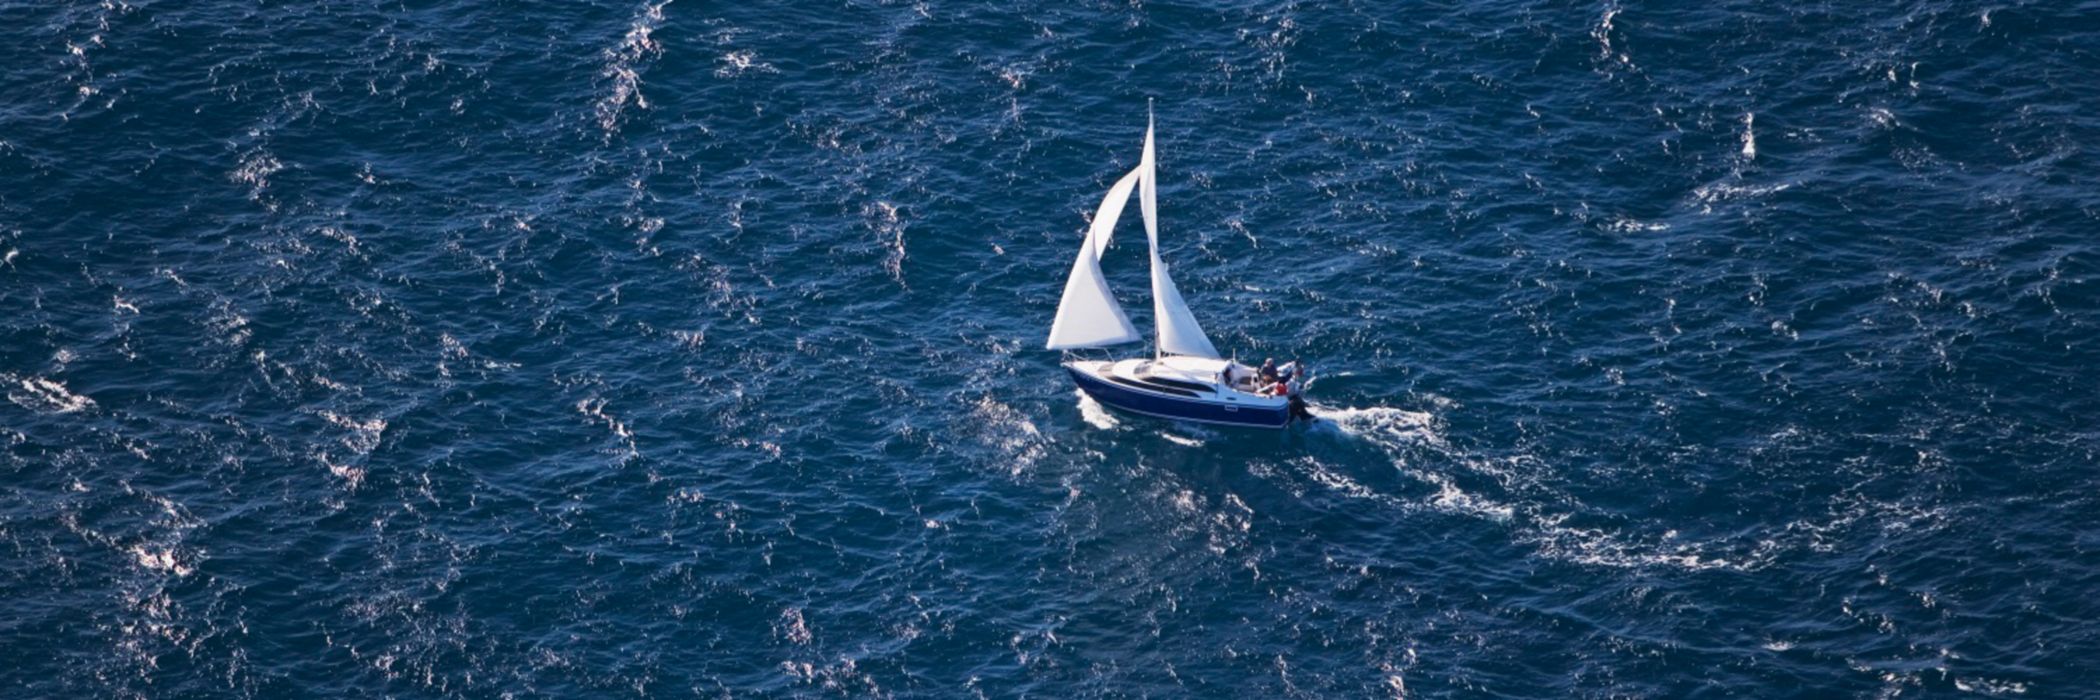 Deck boat sailing through sea